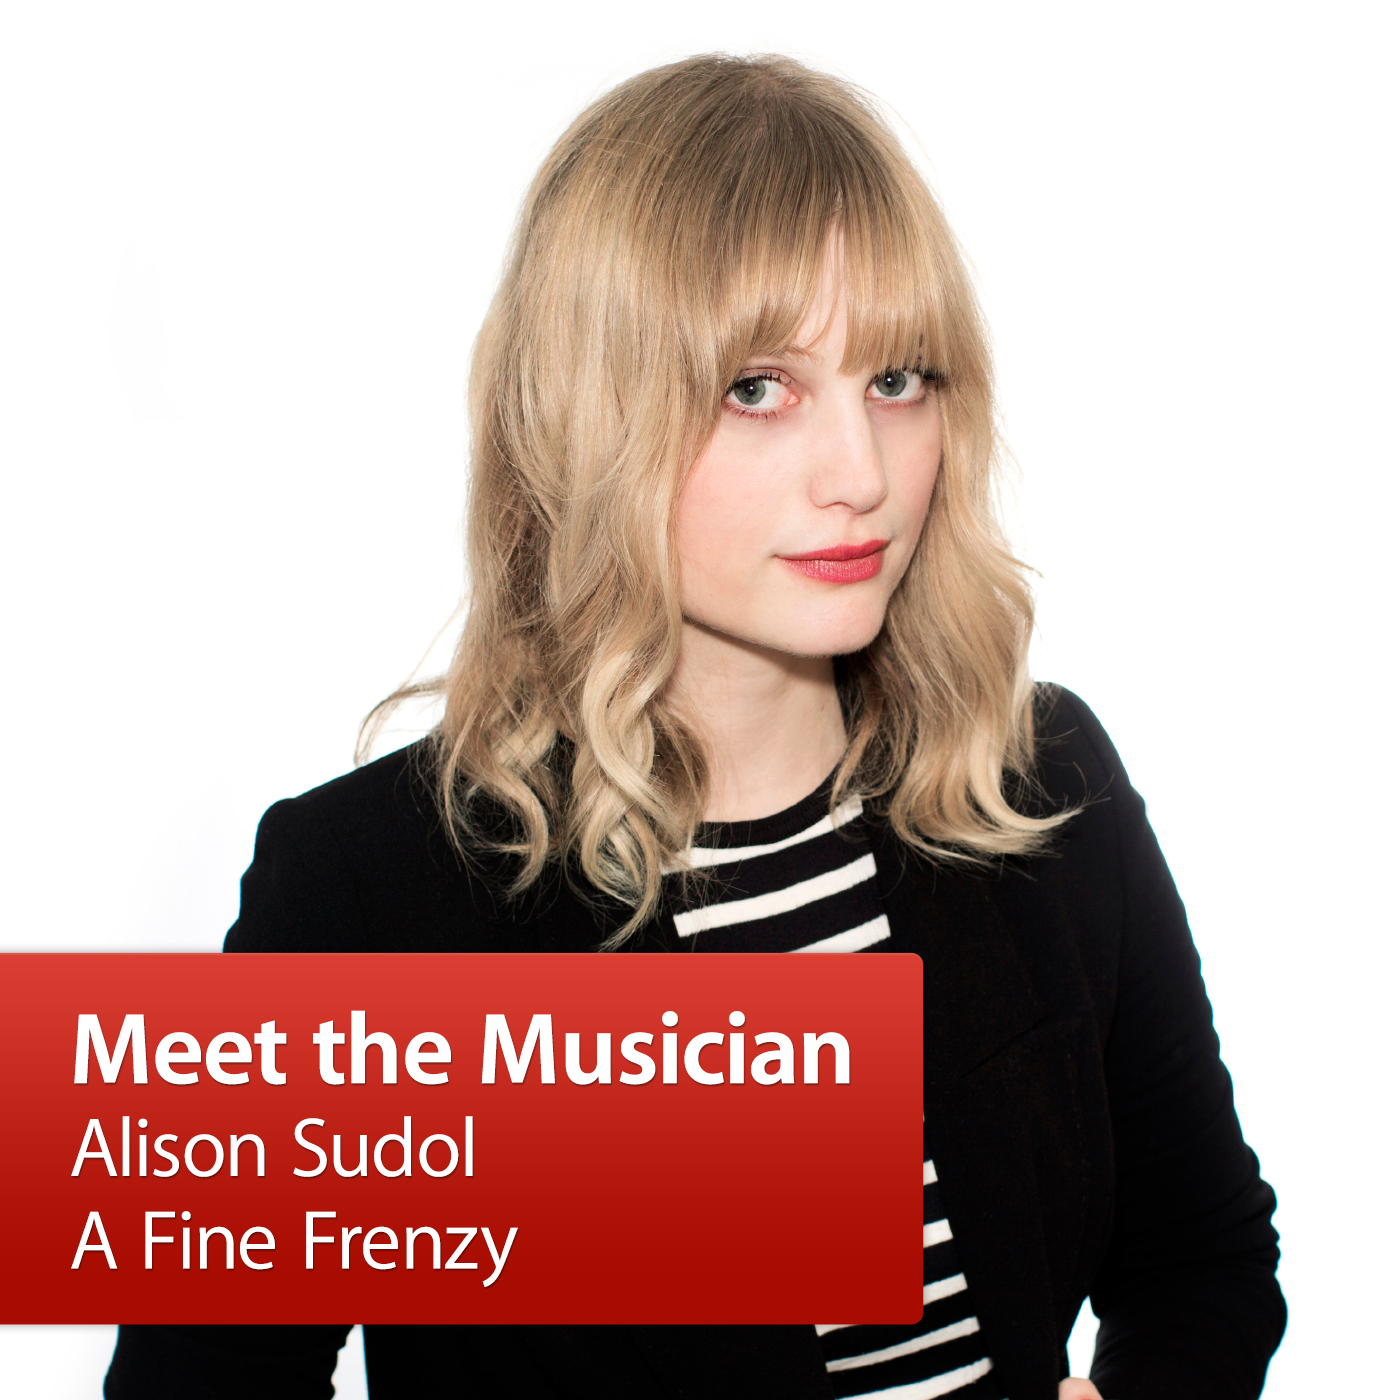 Alison Sudol, A Fine Frenzy: Meet the Musician